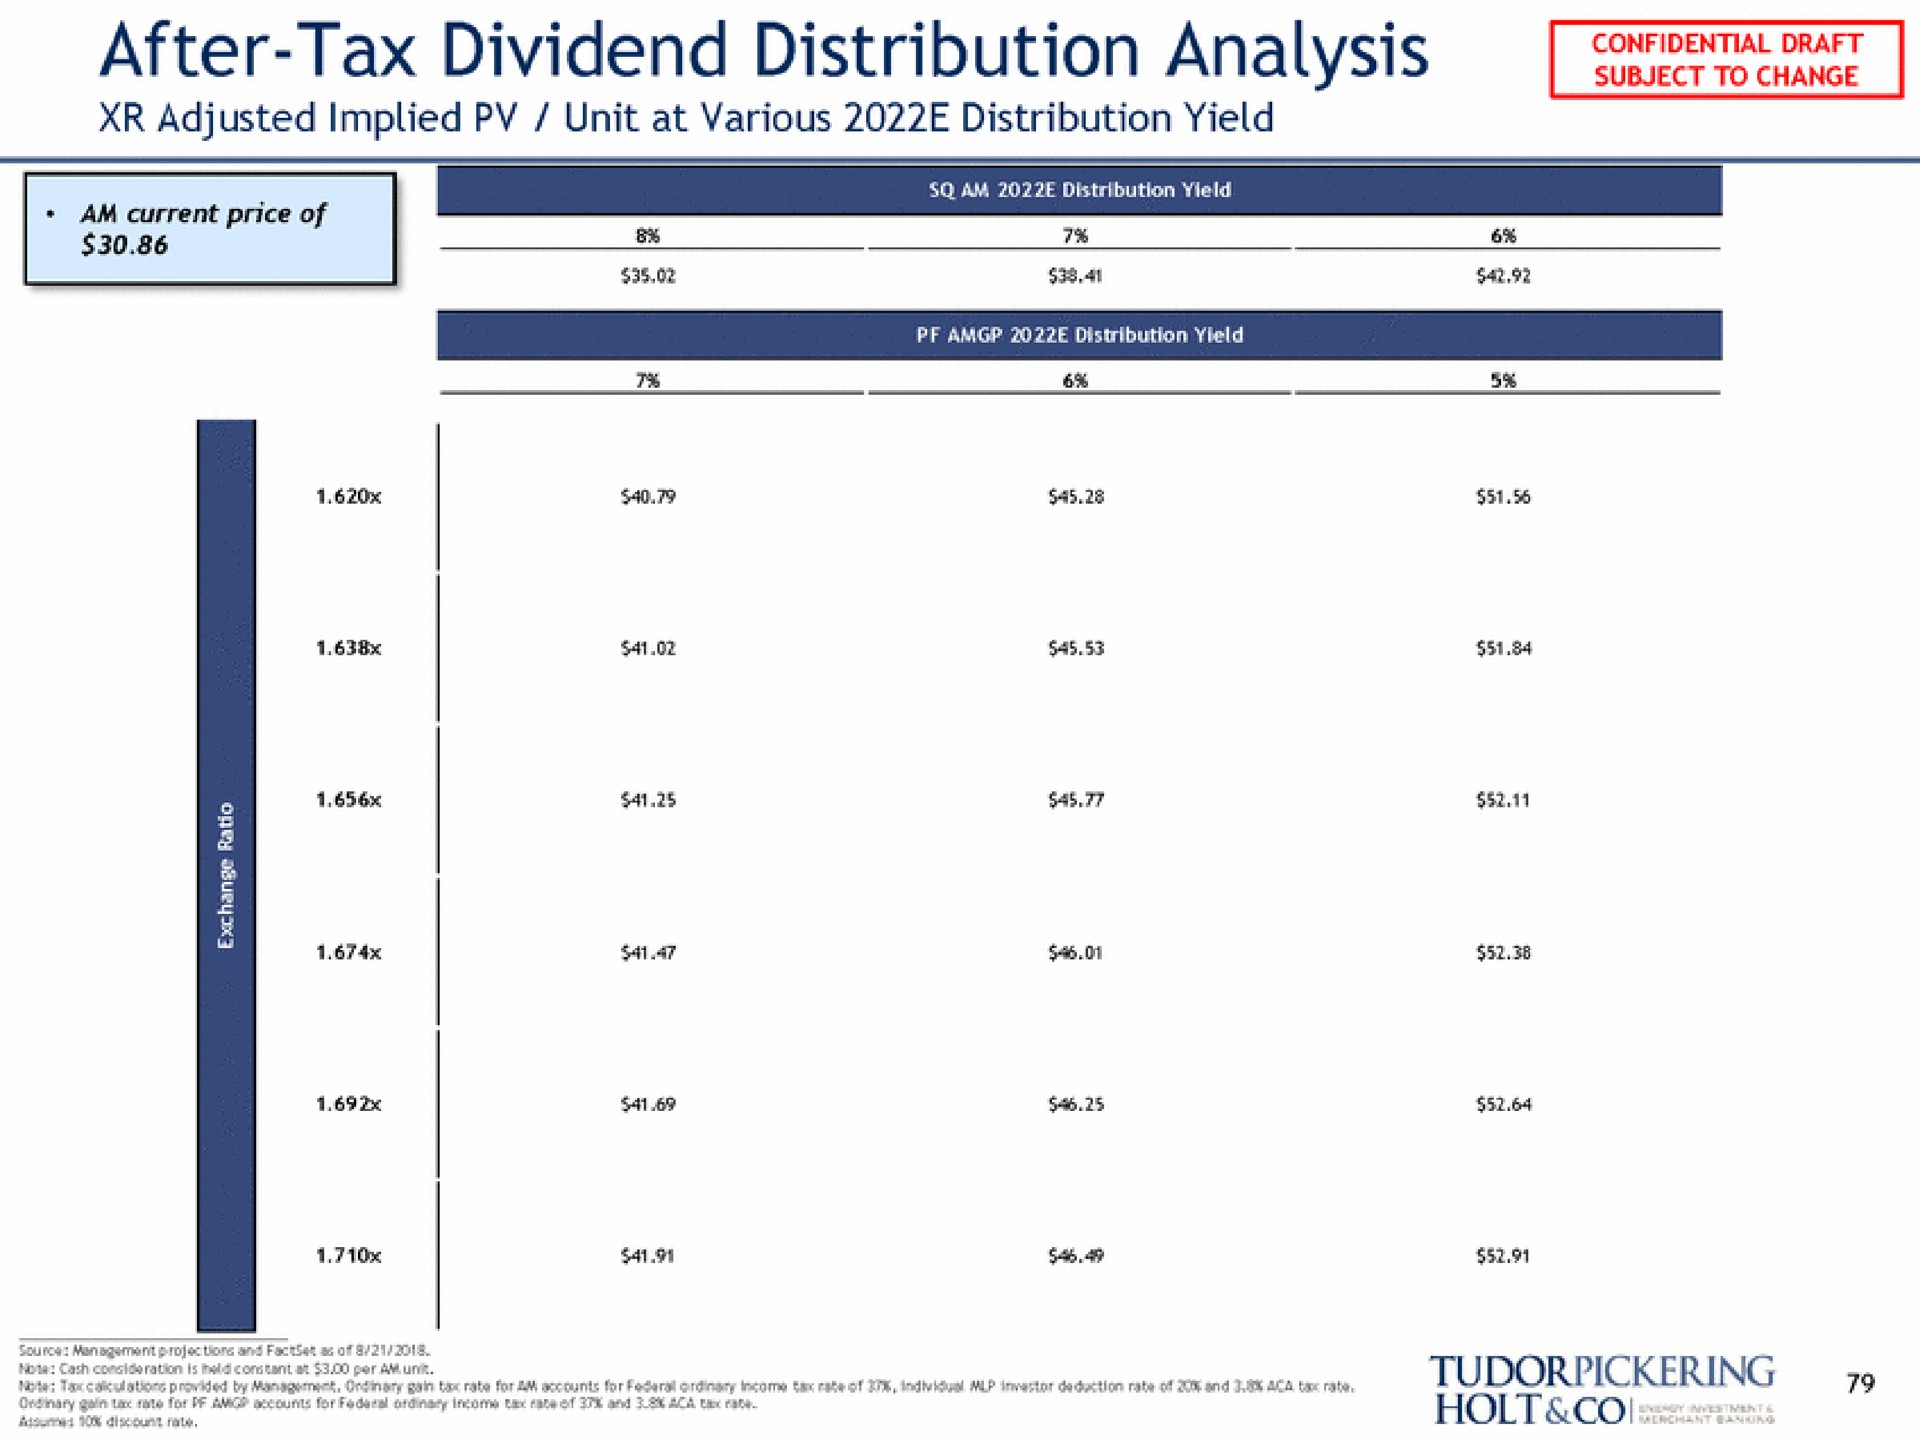 after tax dividend distribution analysis holt cancer nema | Tudor, Pickering, Holt & Co